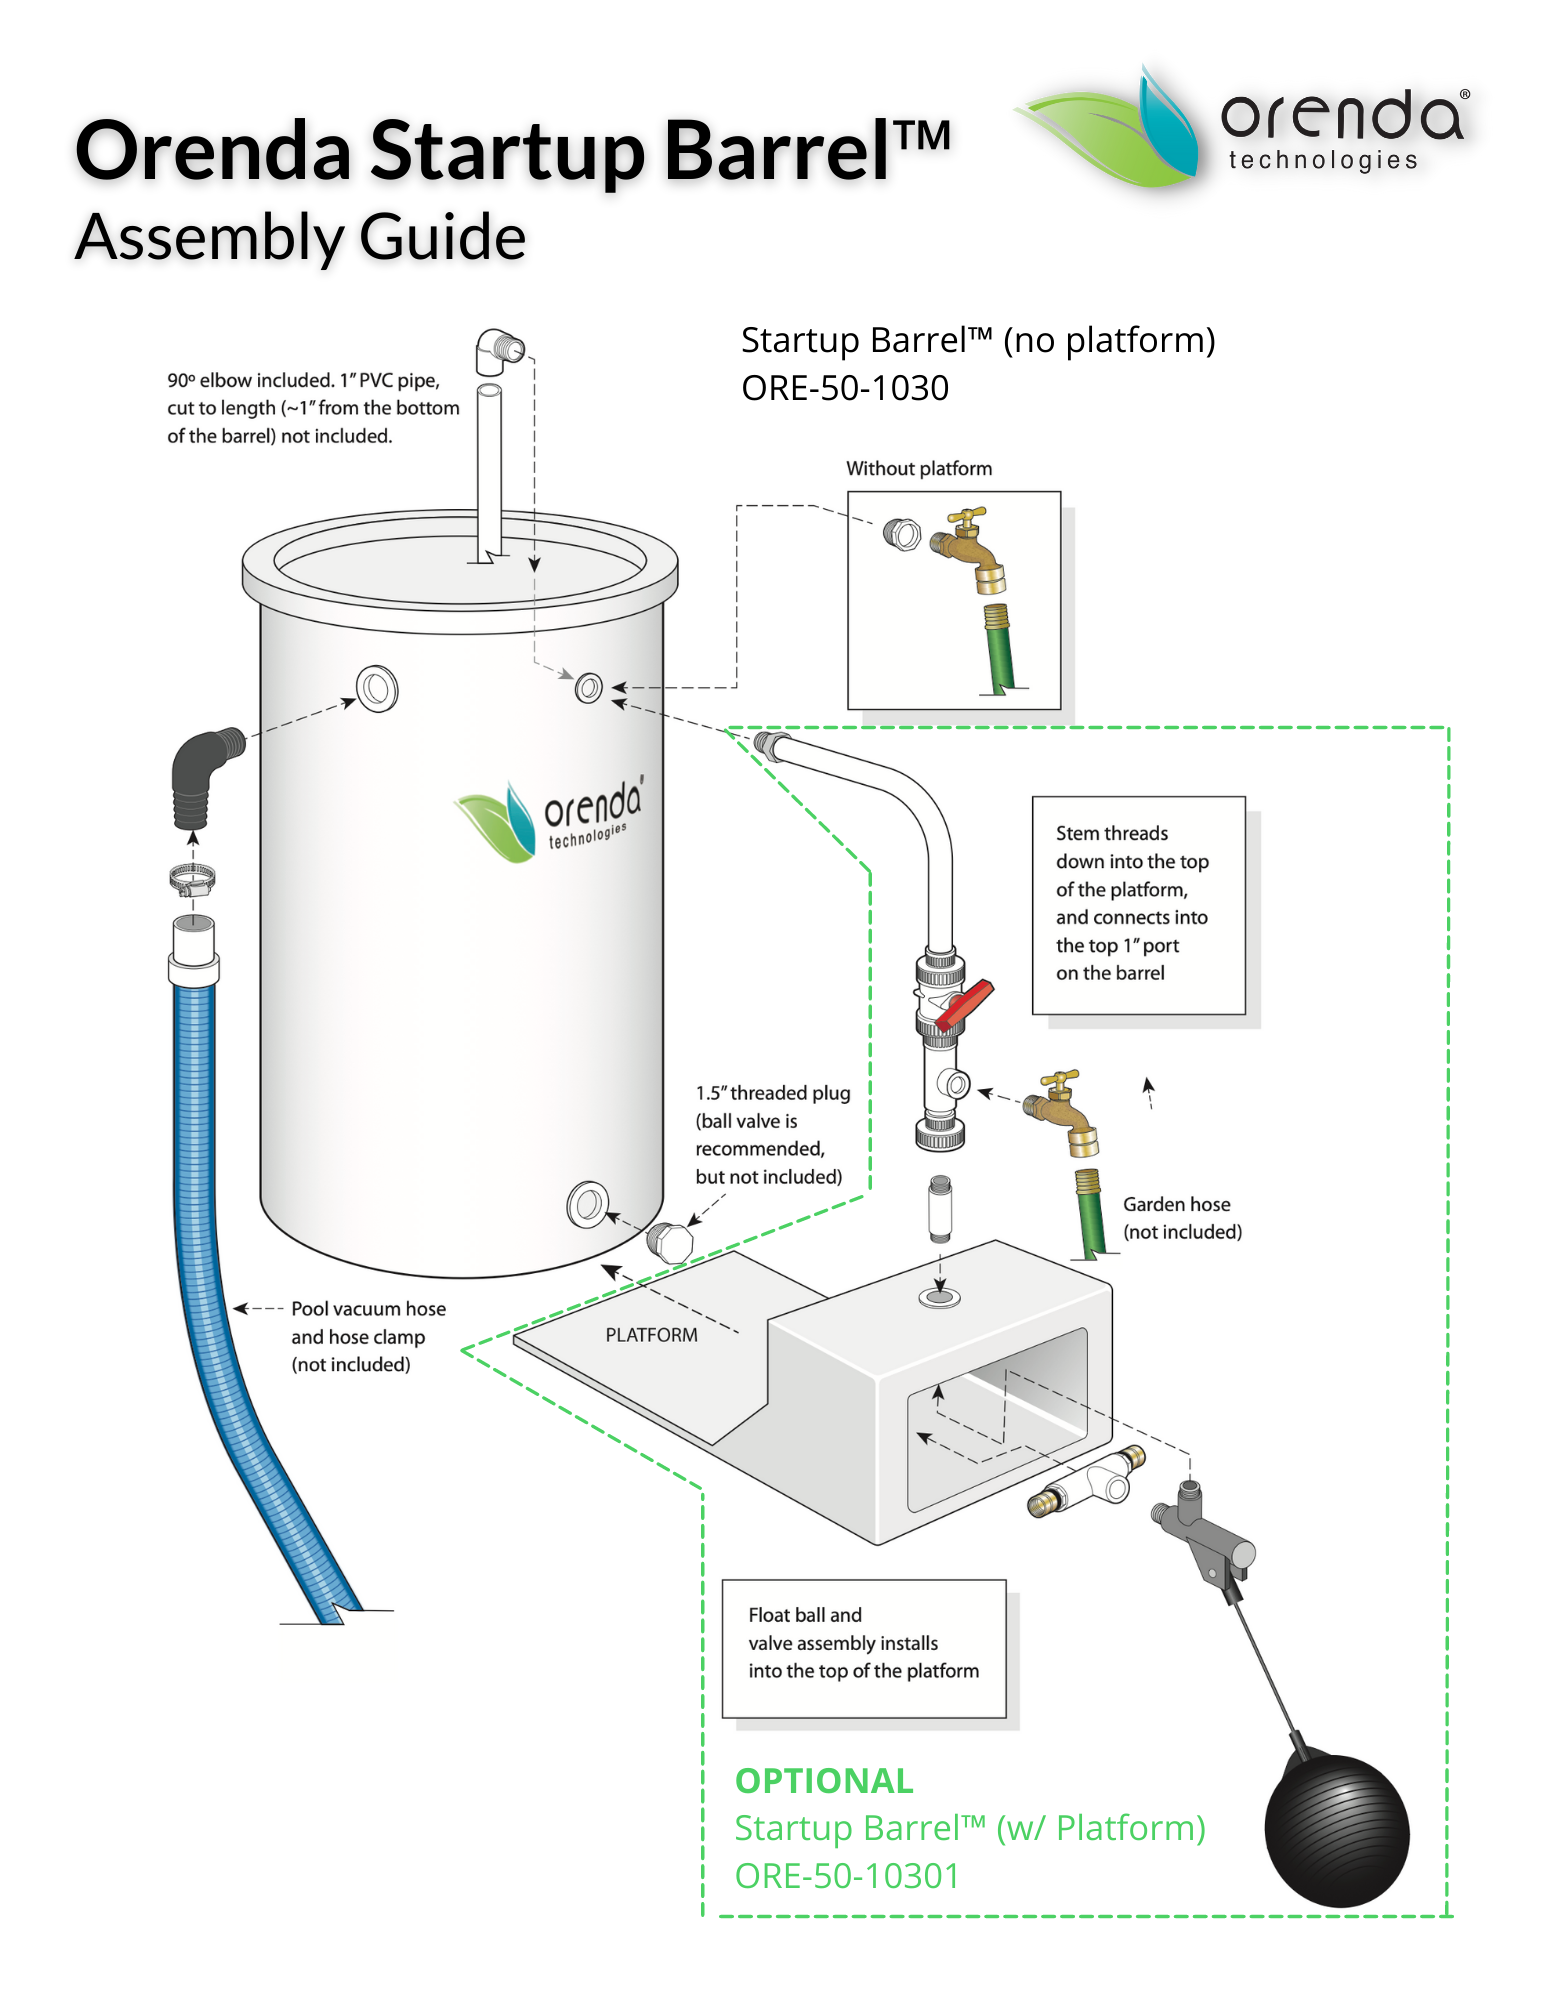 Startup Barrel assembly guide (web), orenda startup barrel, orenda startup